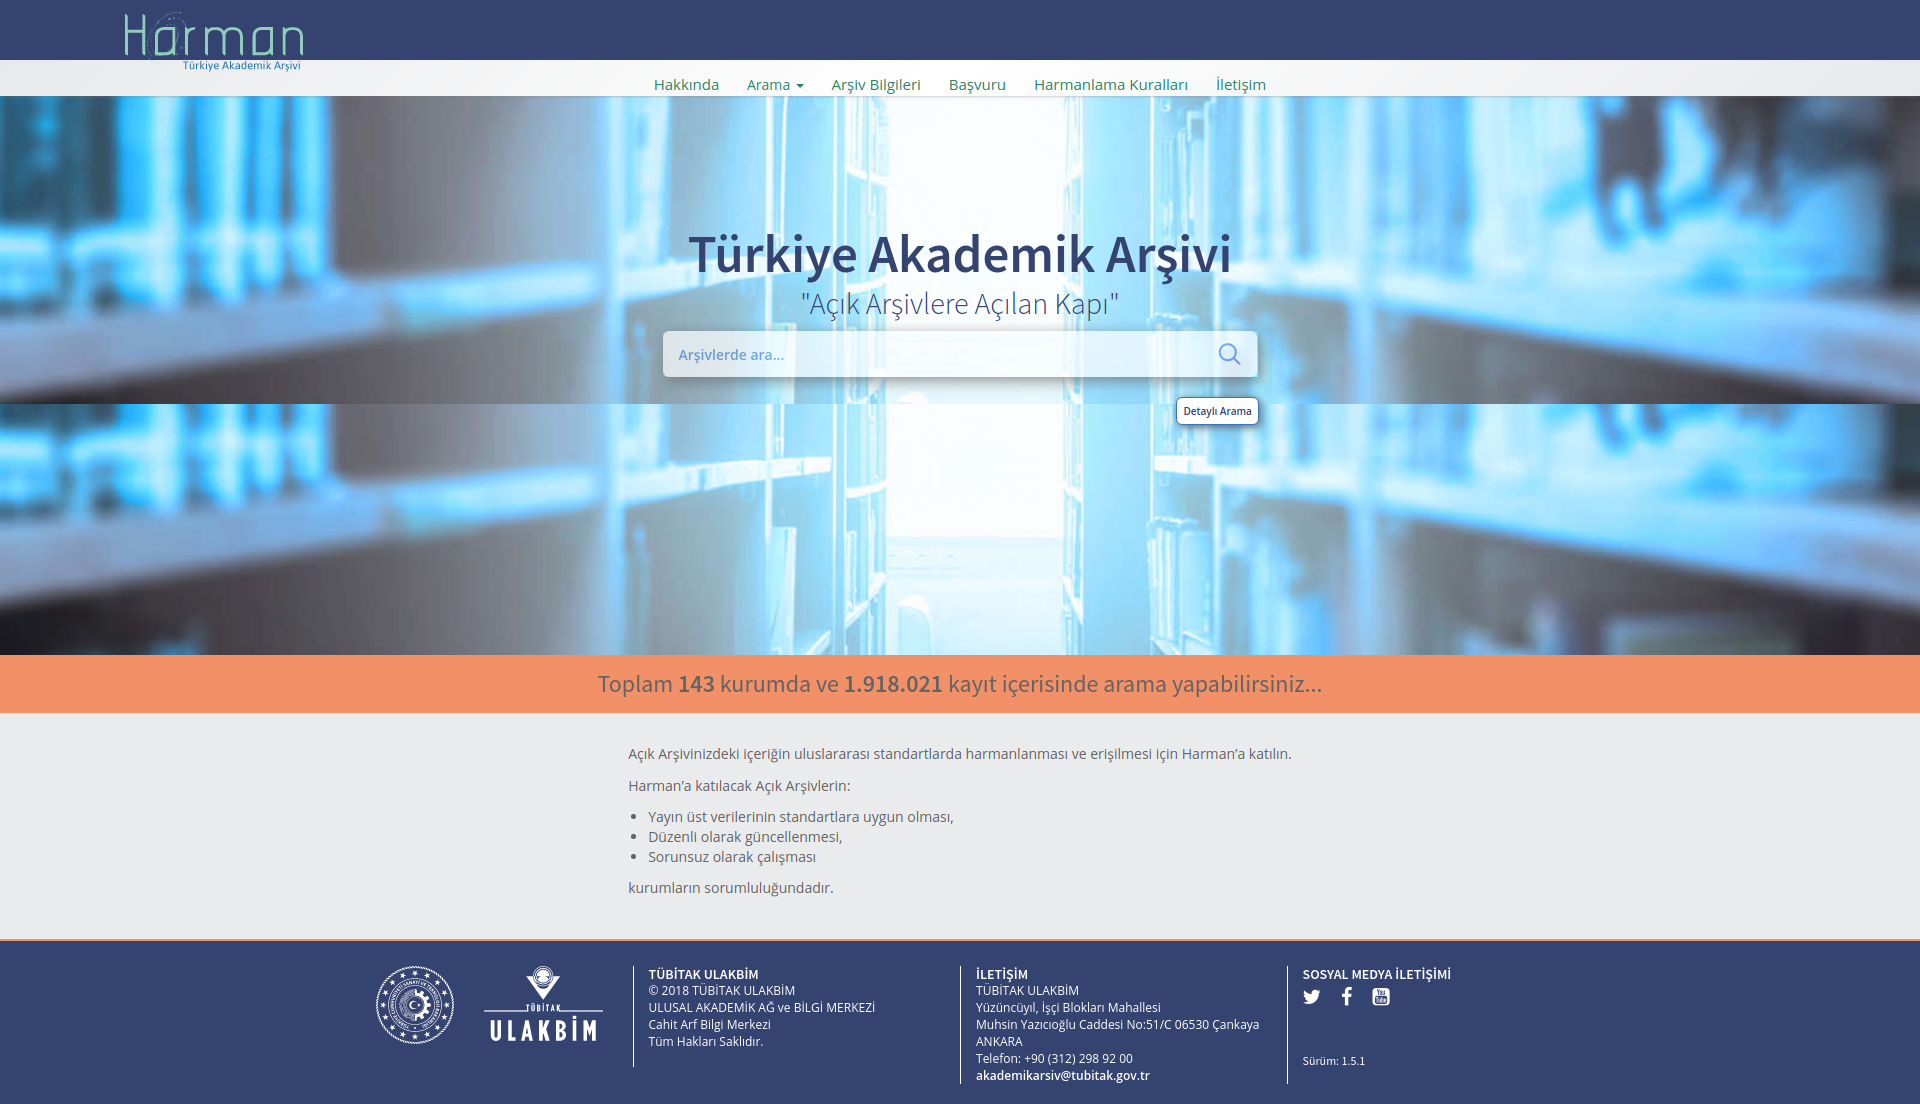 HARMAN - Turkey Academic Archive